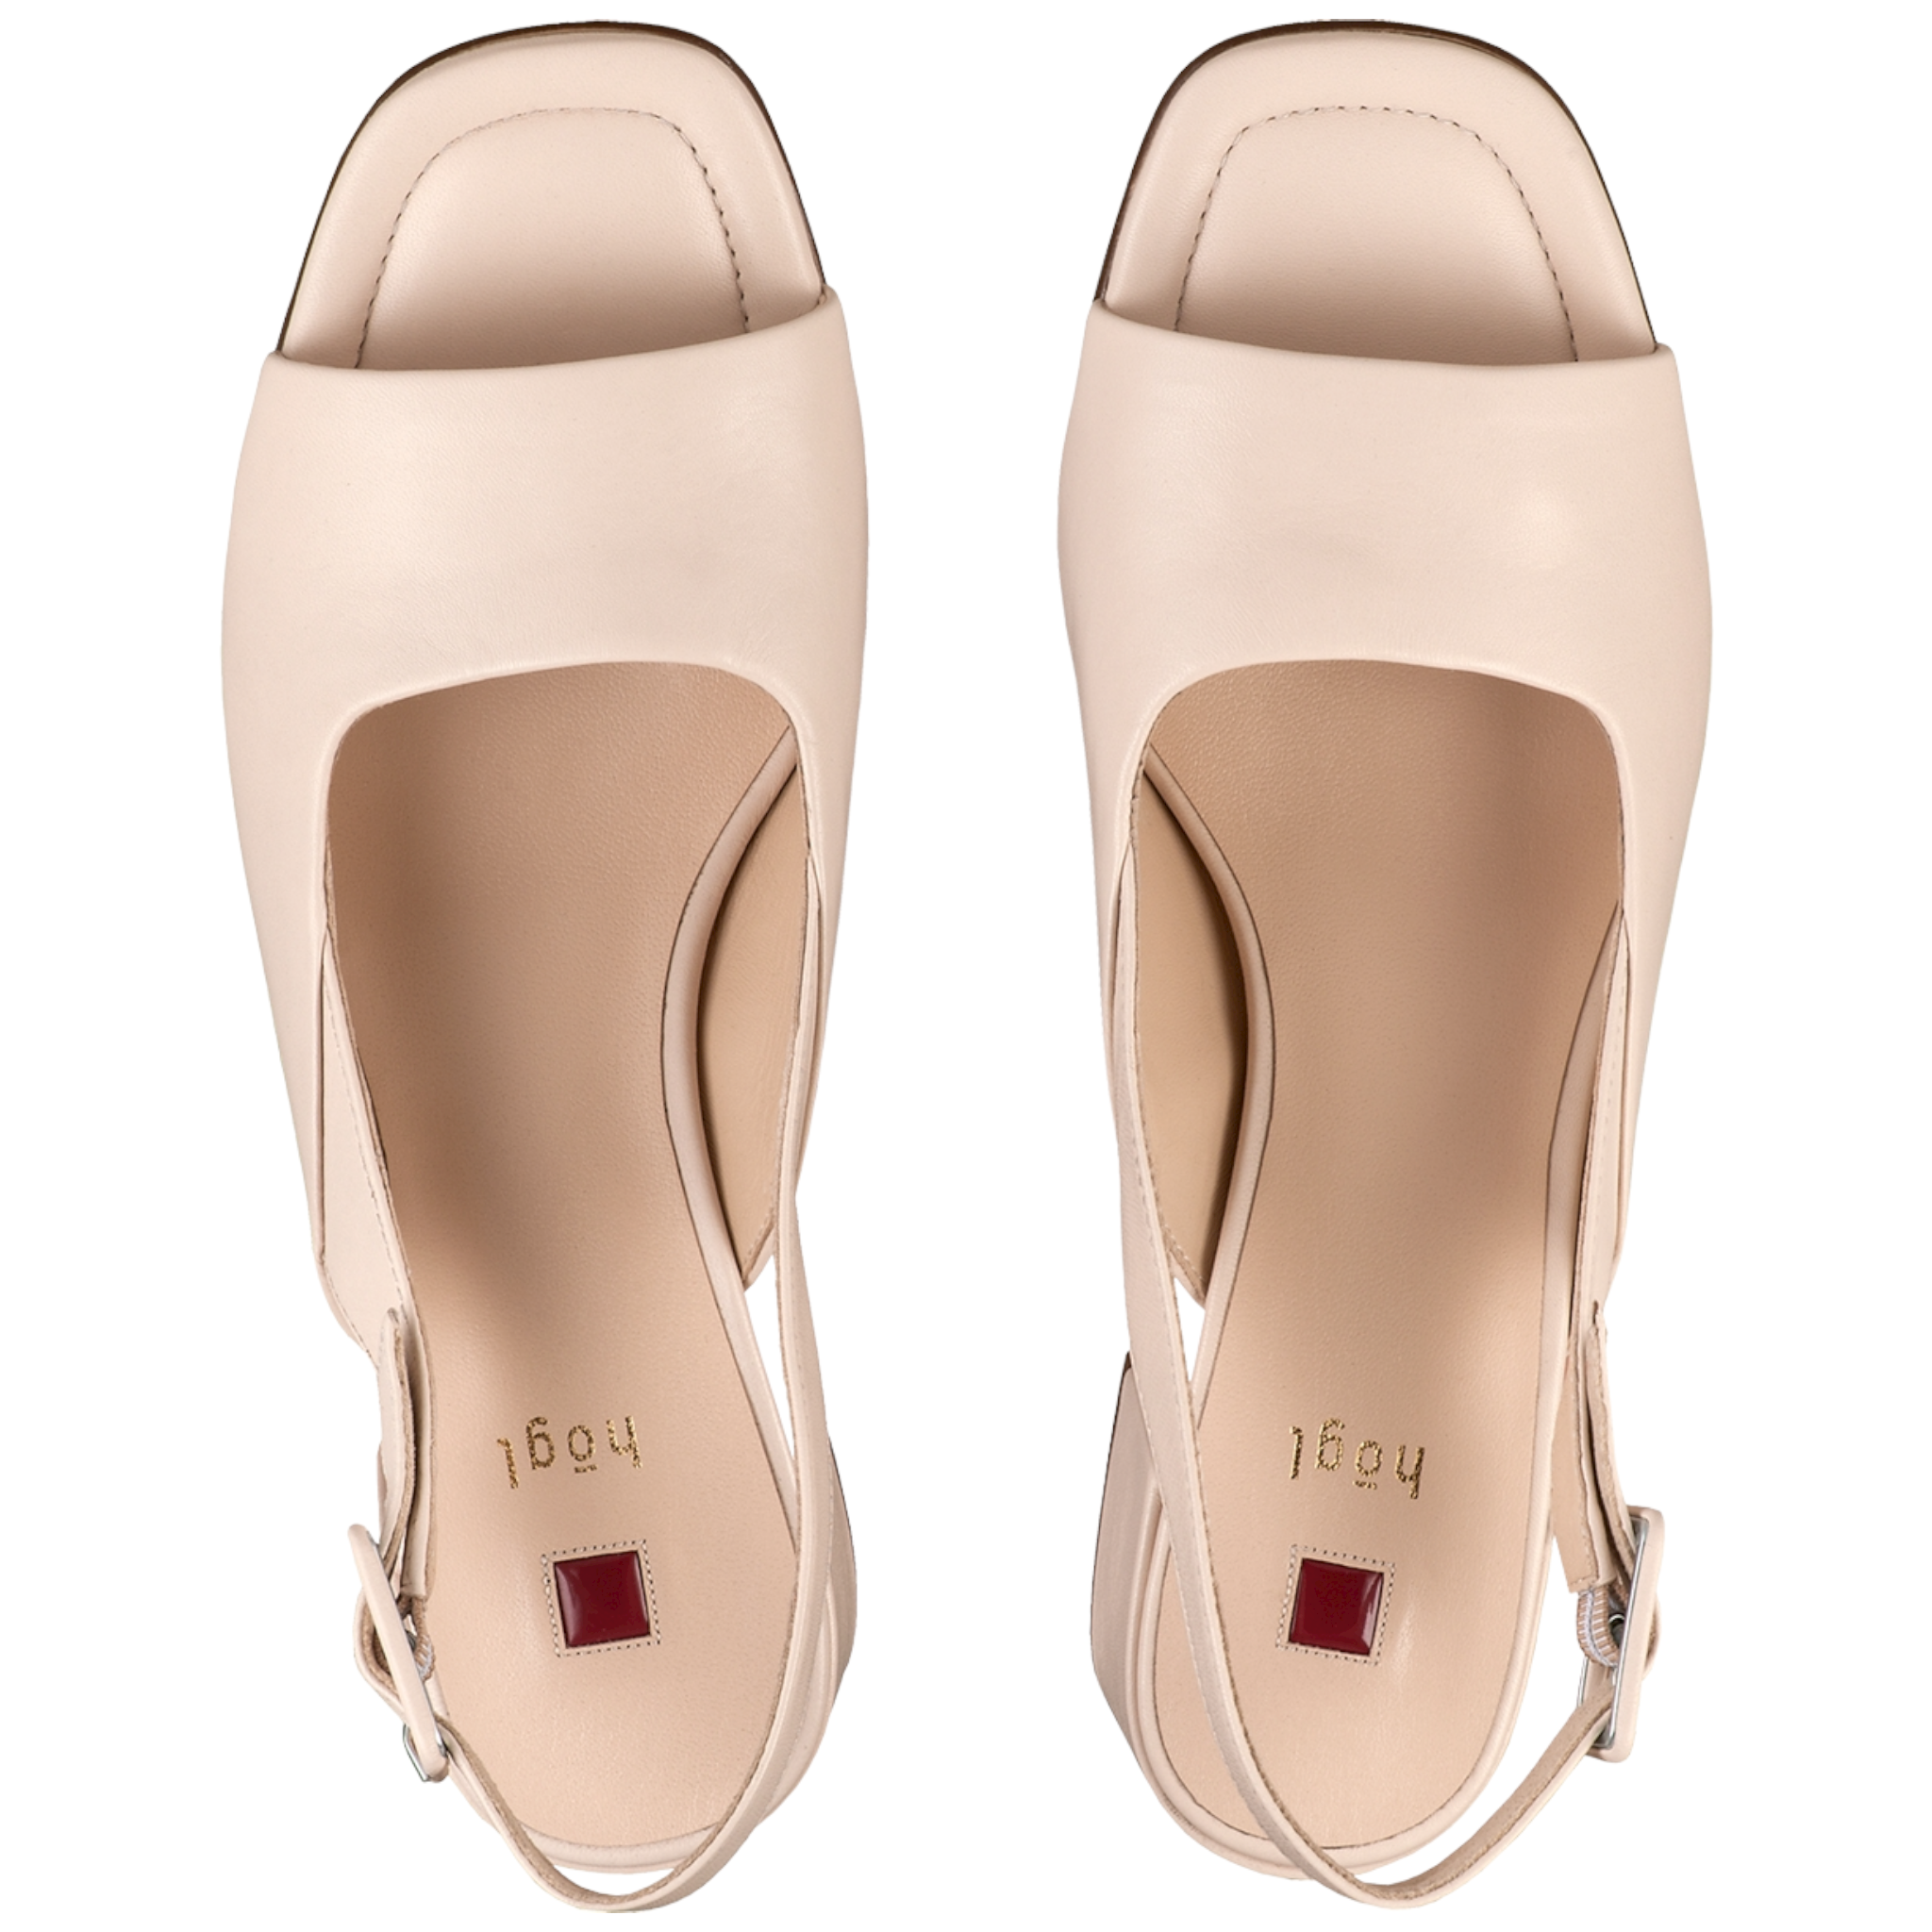 Hopper - shoe&amp;me - Hogl - Heels - Heels, Sandal, Summer 22, Womens